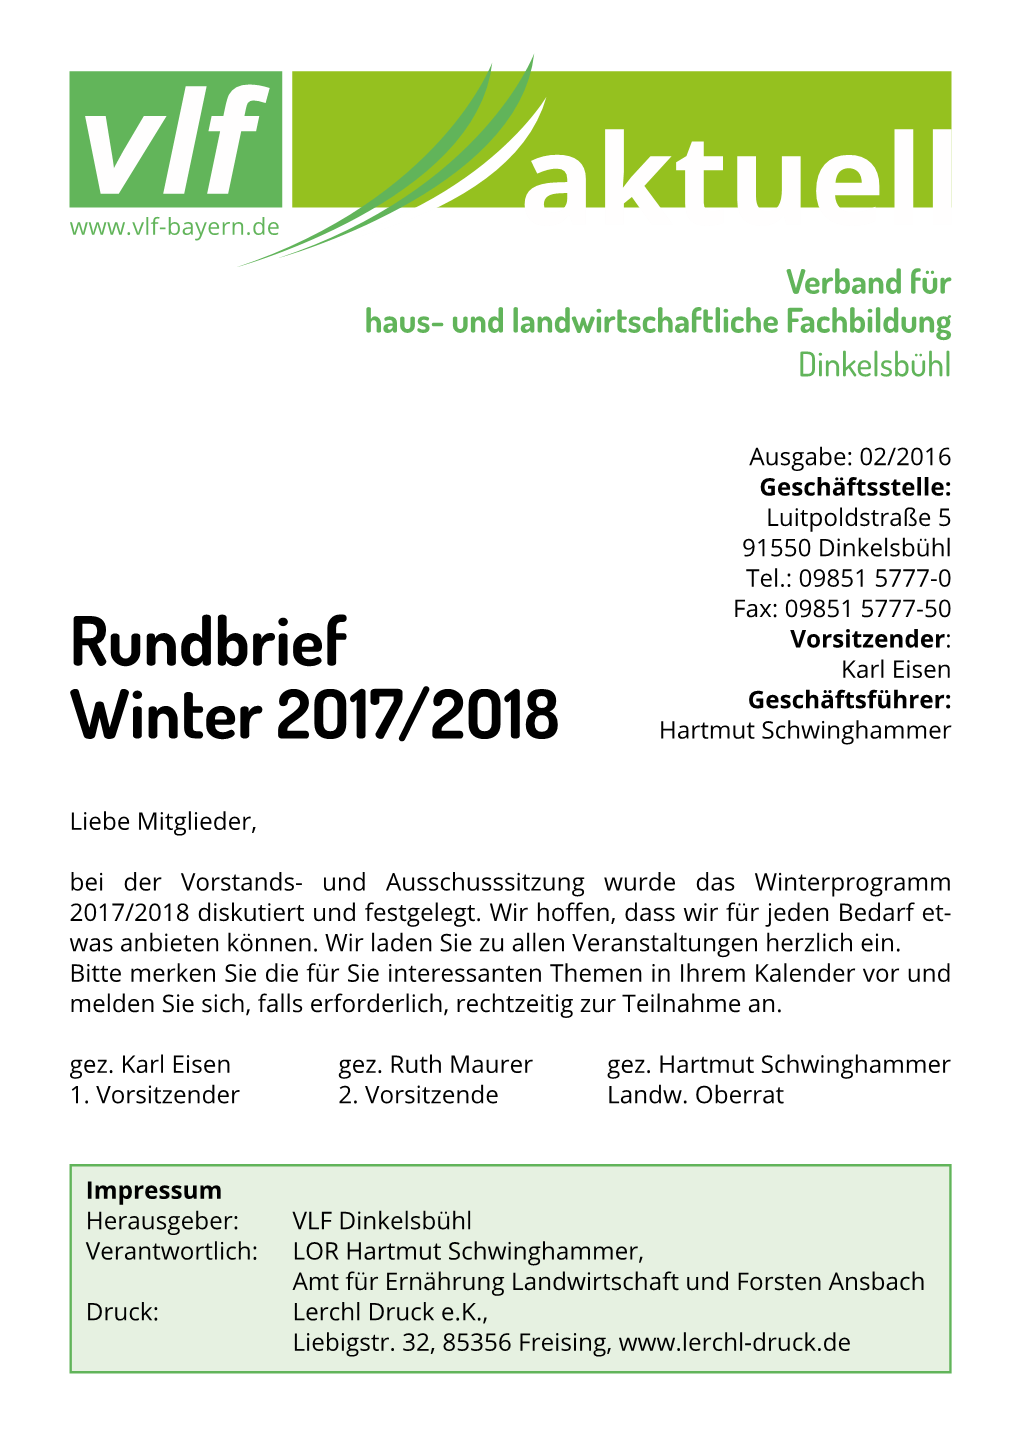 Rundbrief Winter 2O17/2O18